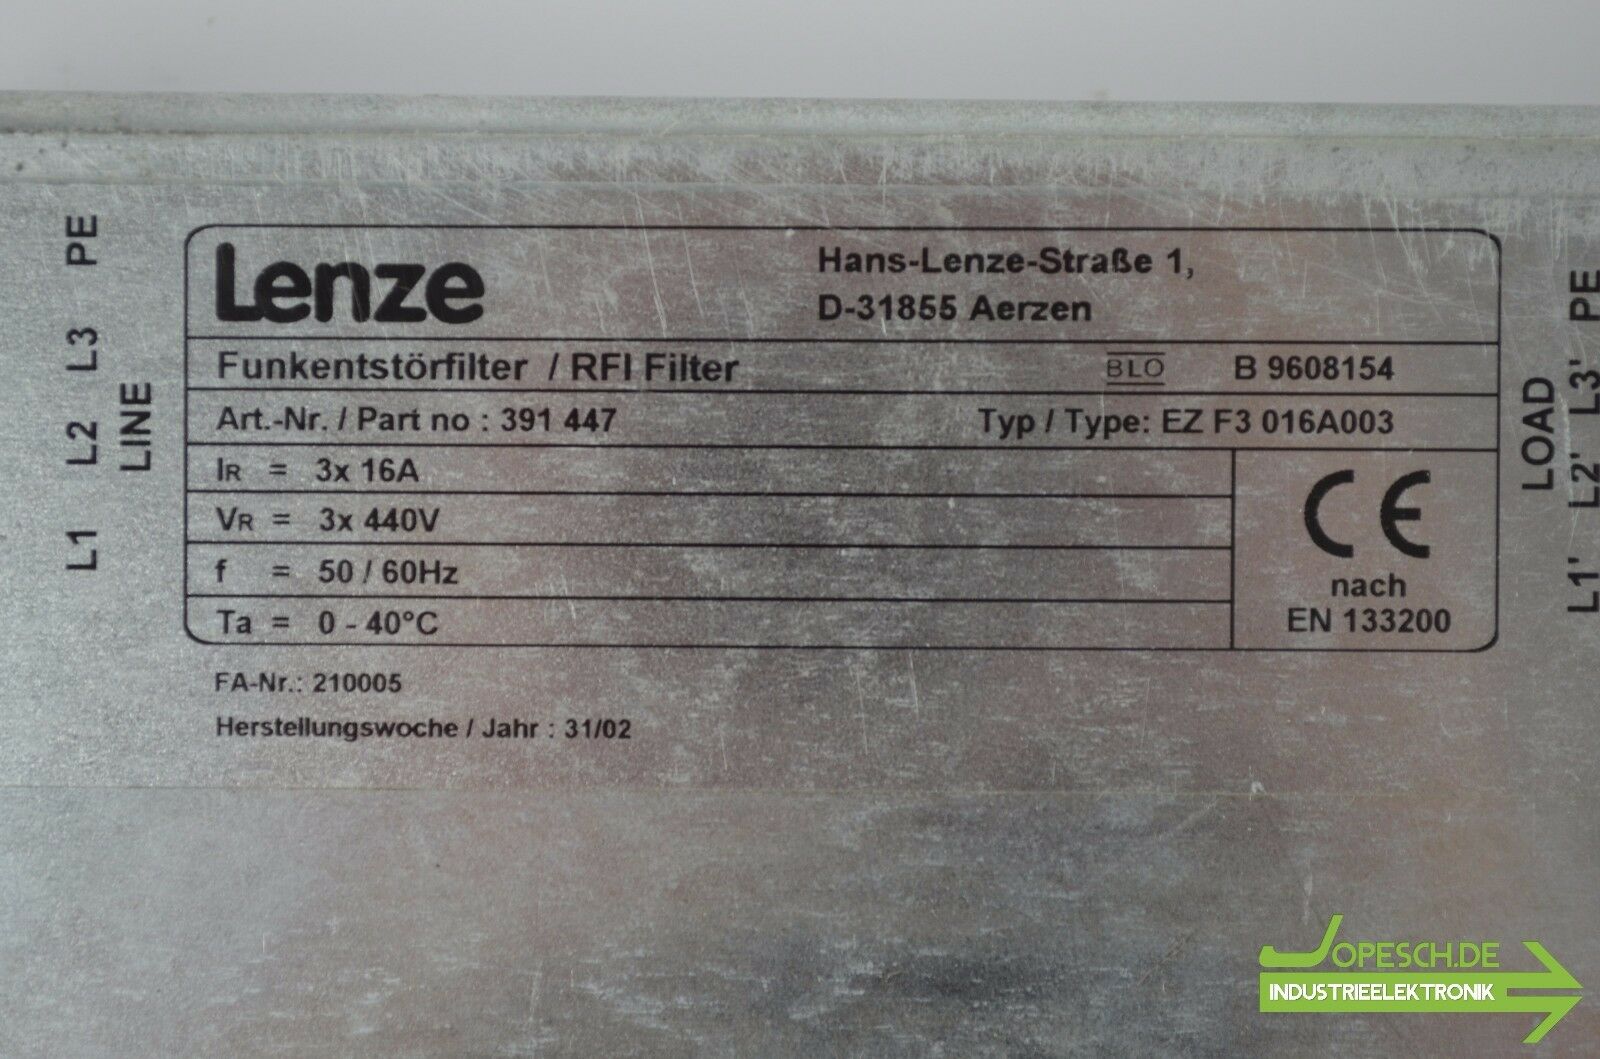 Lenze Funkentstörfilter / RFI Filter EZ F3 016A003